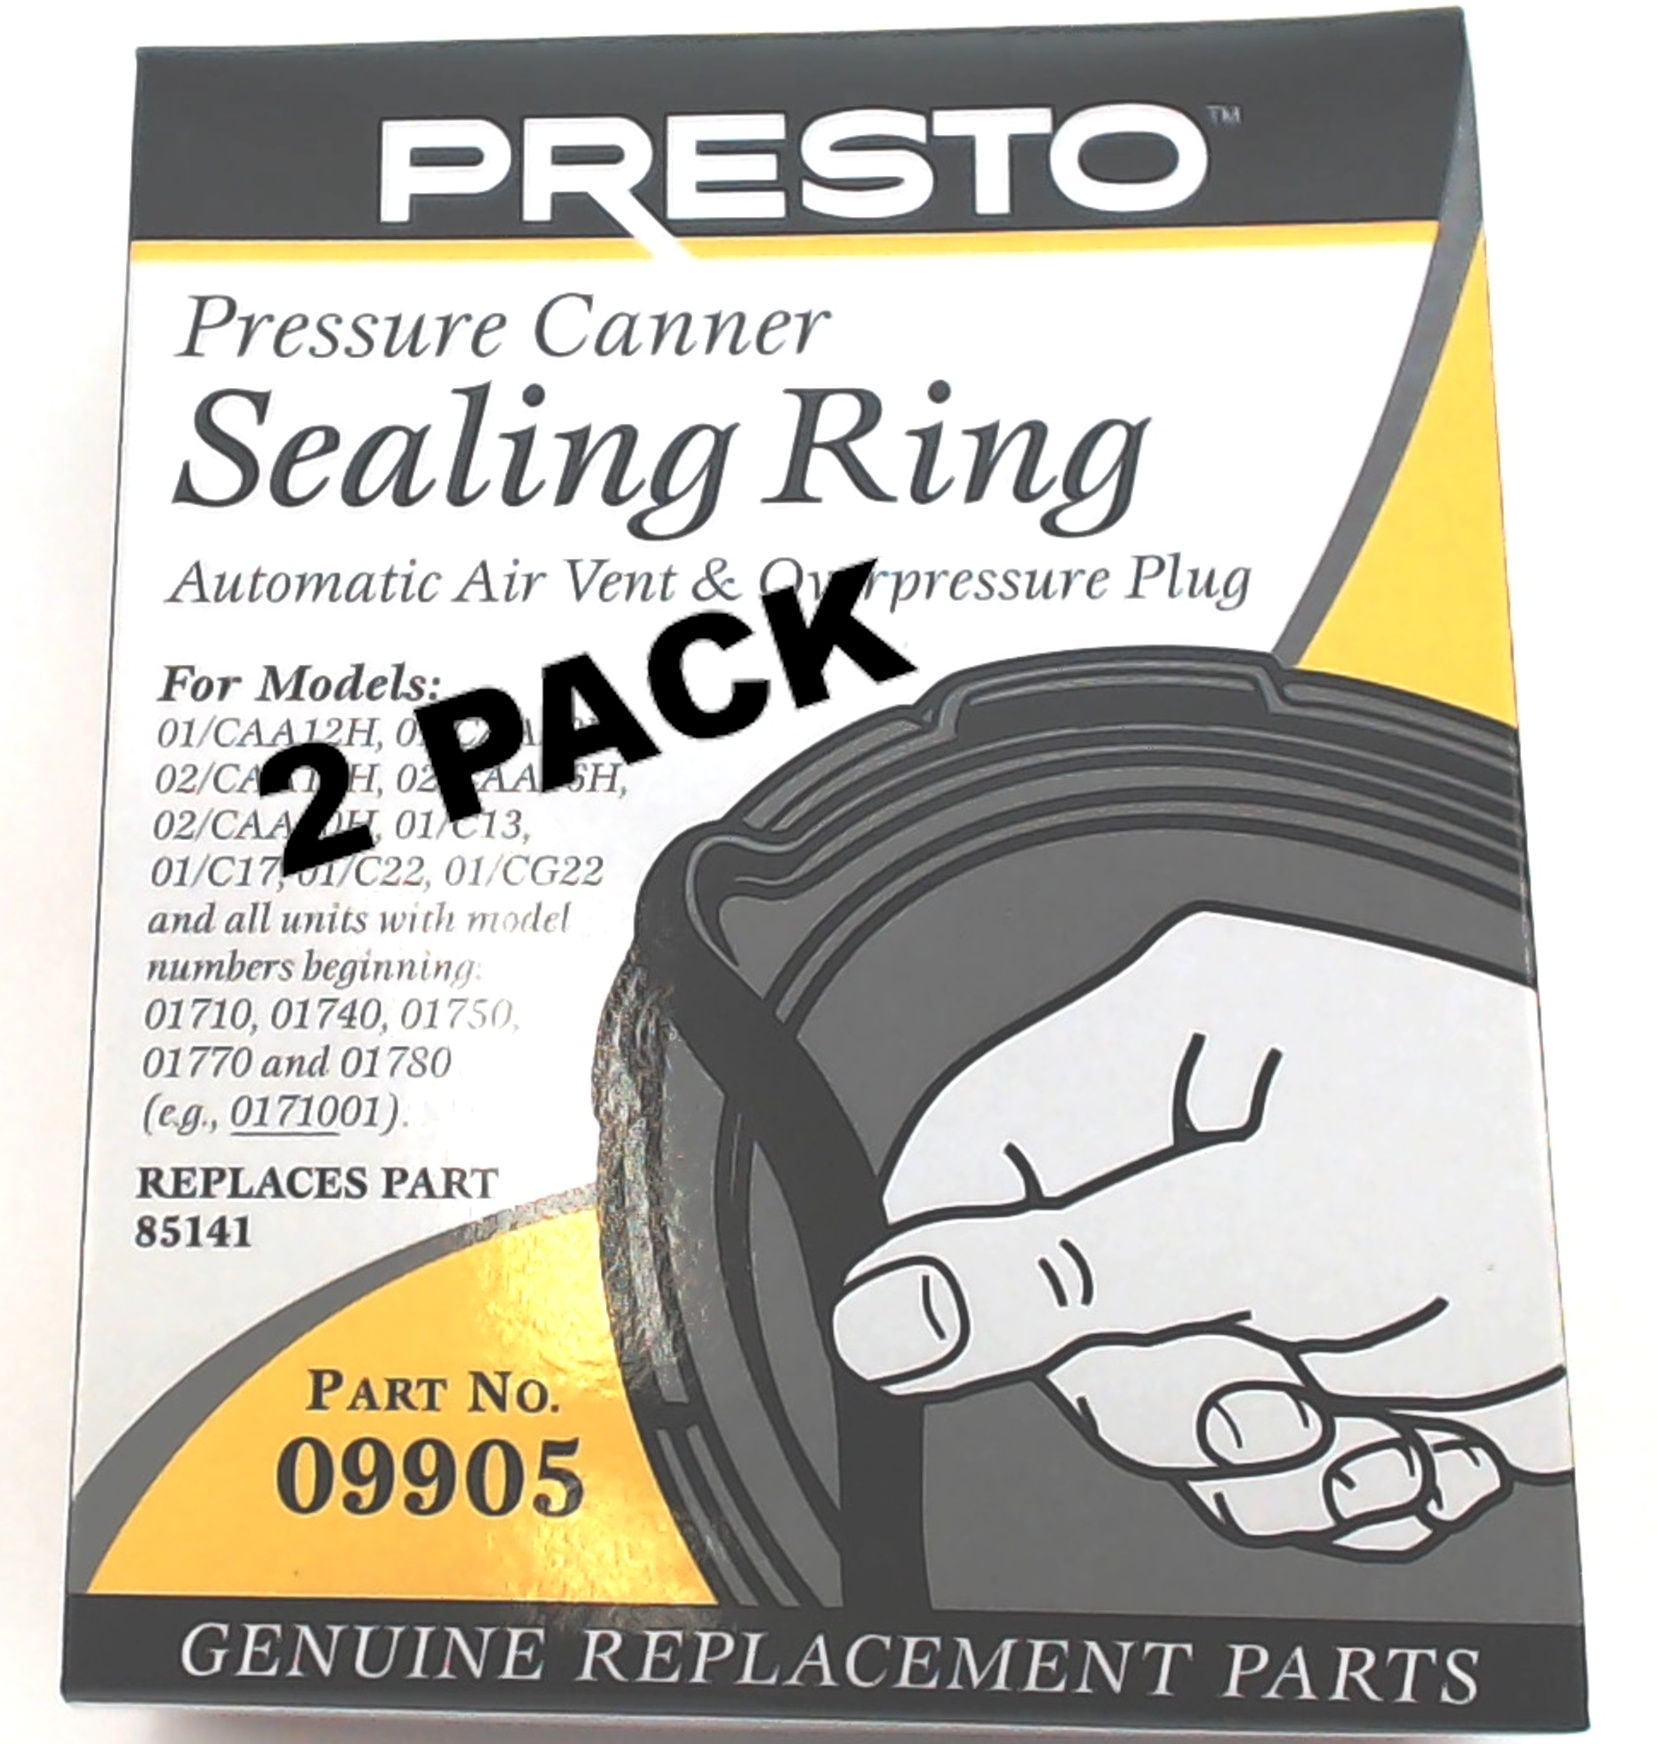 2 Pack Sealing Ring & Over Pressure Plug for Presto Pressure Cooker 